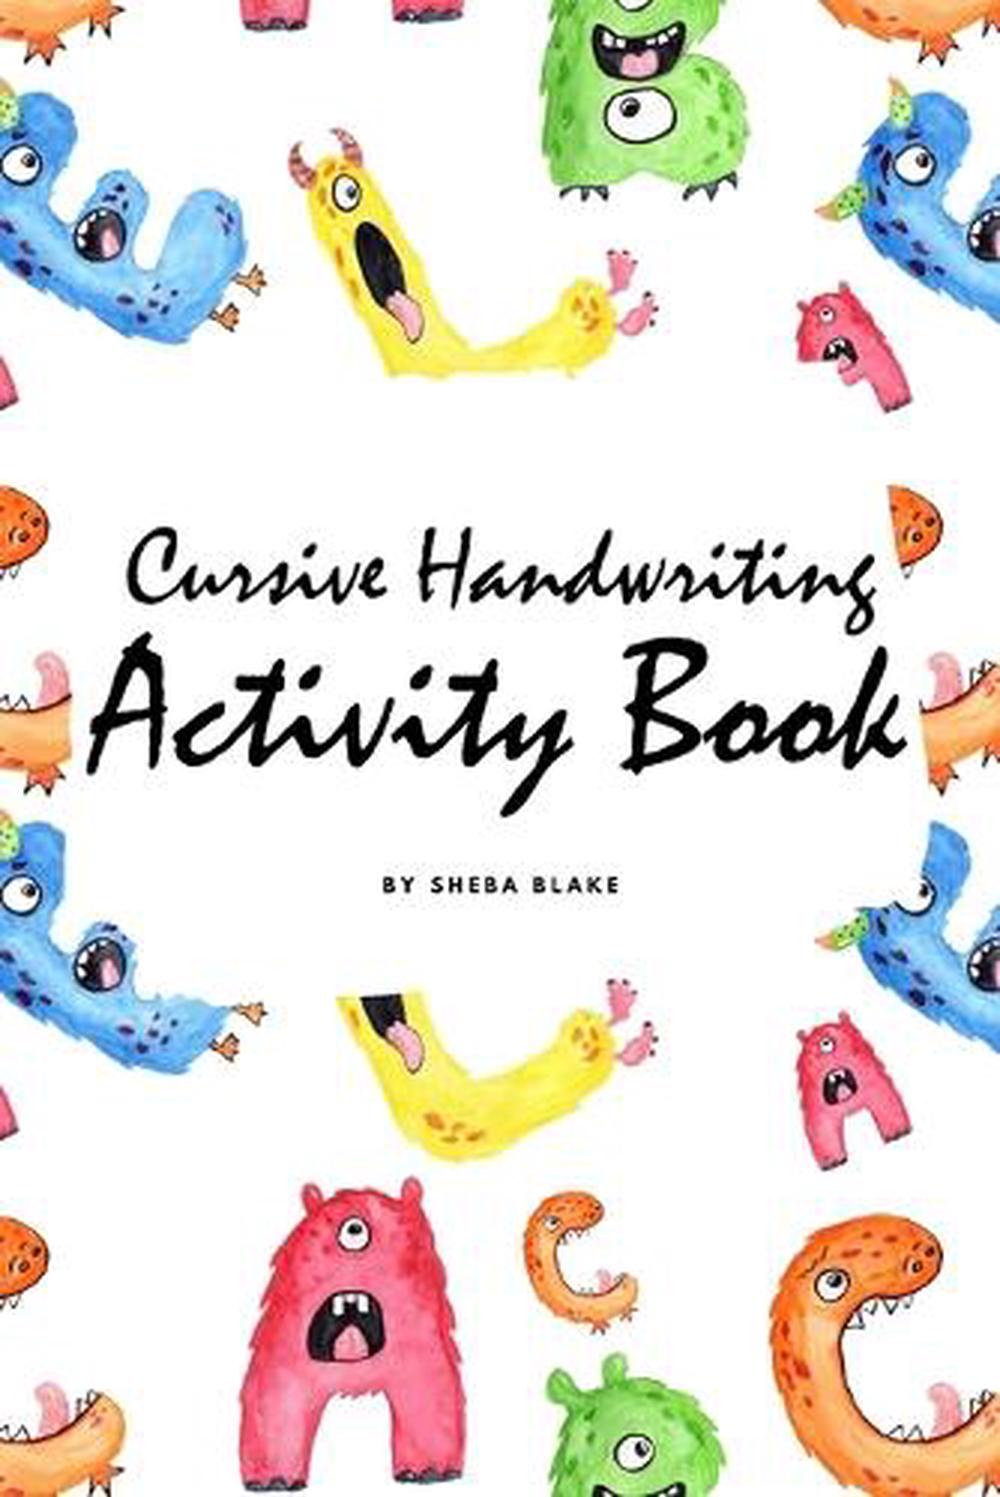 Cursive Handwriting Activity Book for Children (6x9 Workbook / Activity Book) by 9781222284621 ...